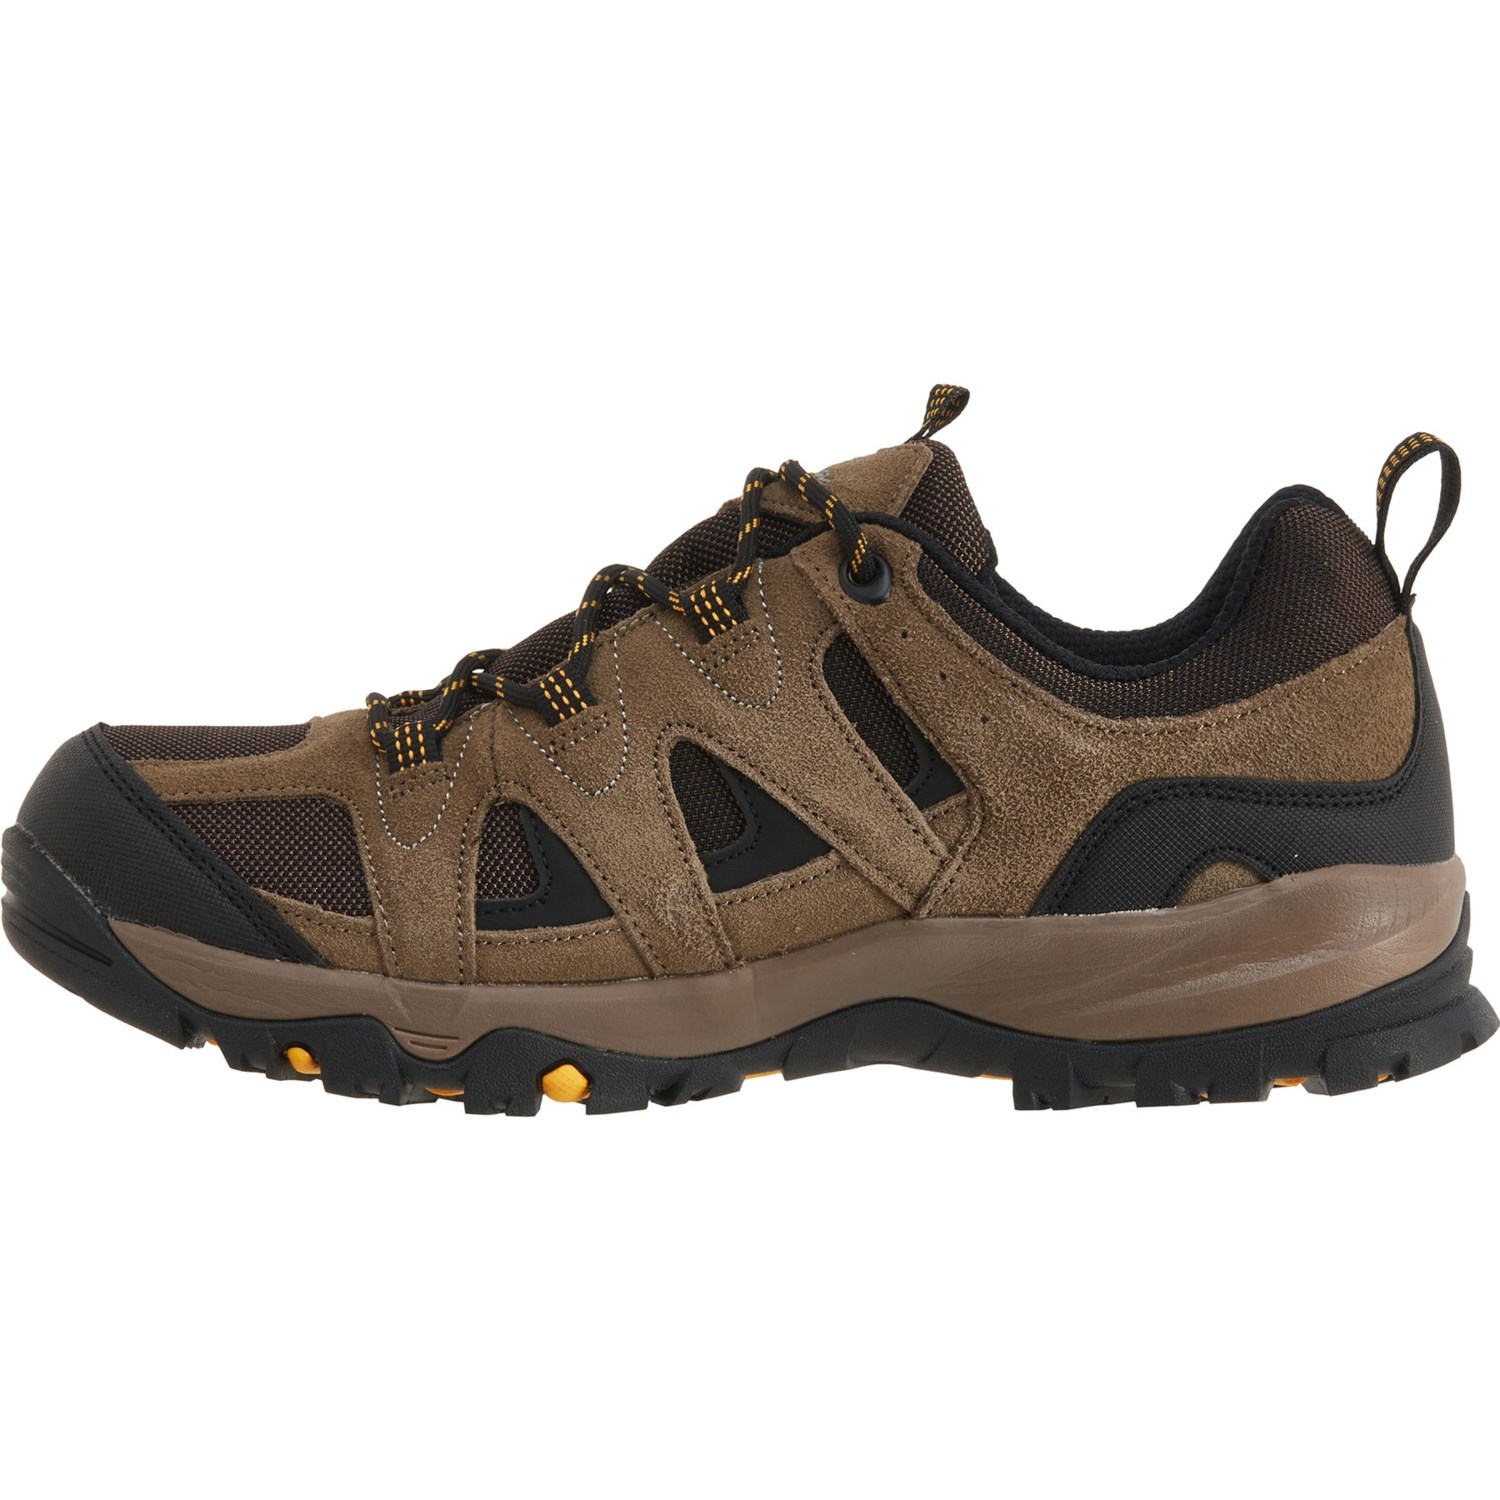 Eddie Bauer Mainland Hiking Shoes (For Men) - Save 30%